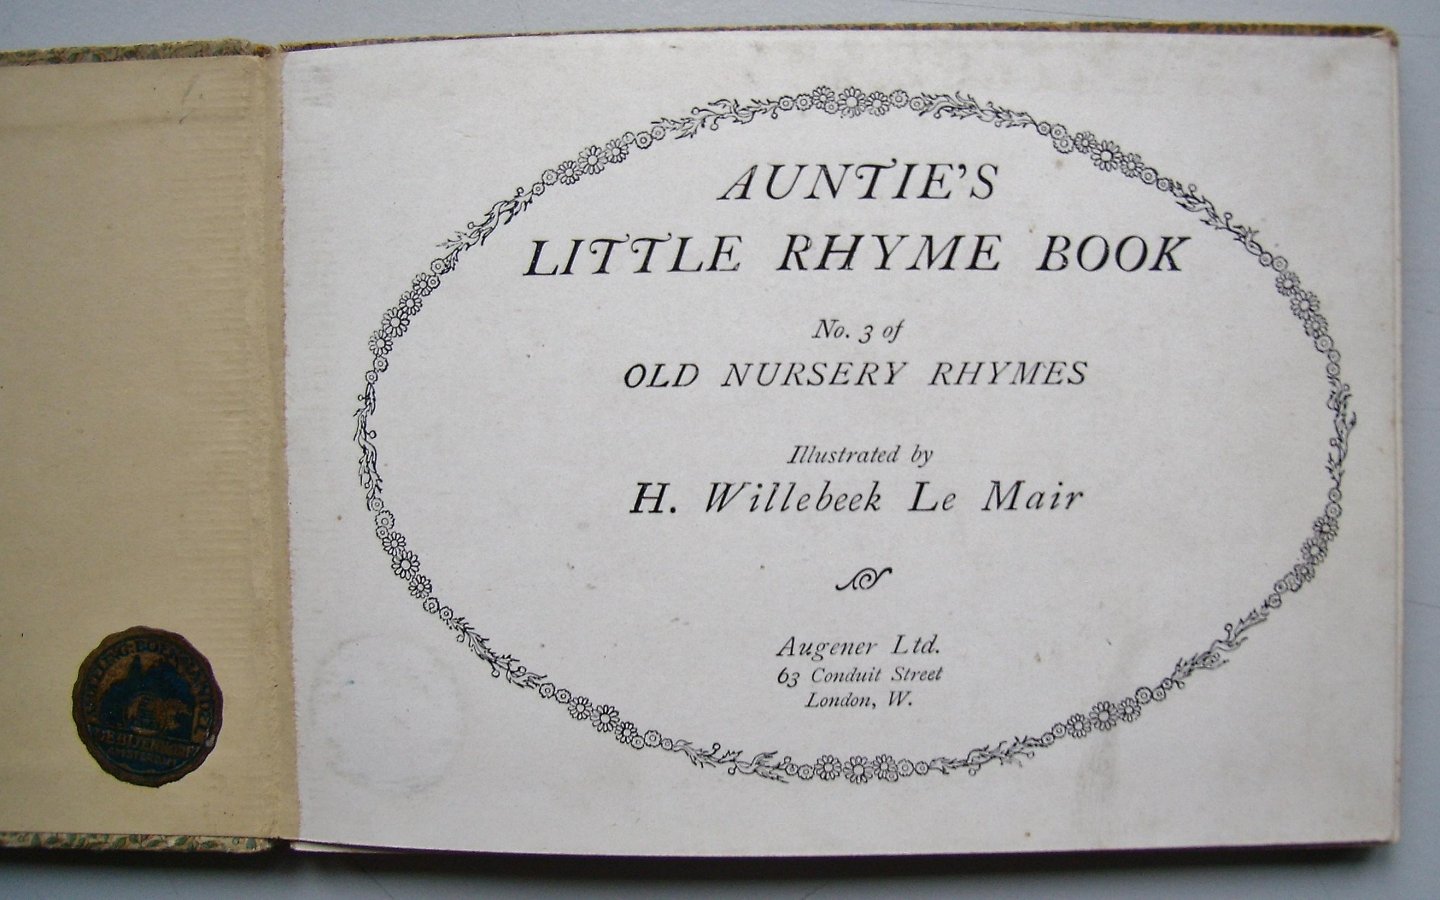 Willebeek le Mair, H. (ill.) - Auntie's little rhyme book / old nursery rhymes no. 3